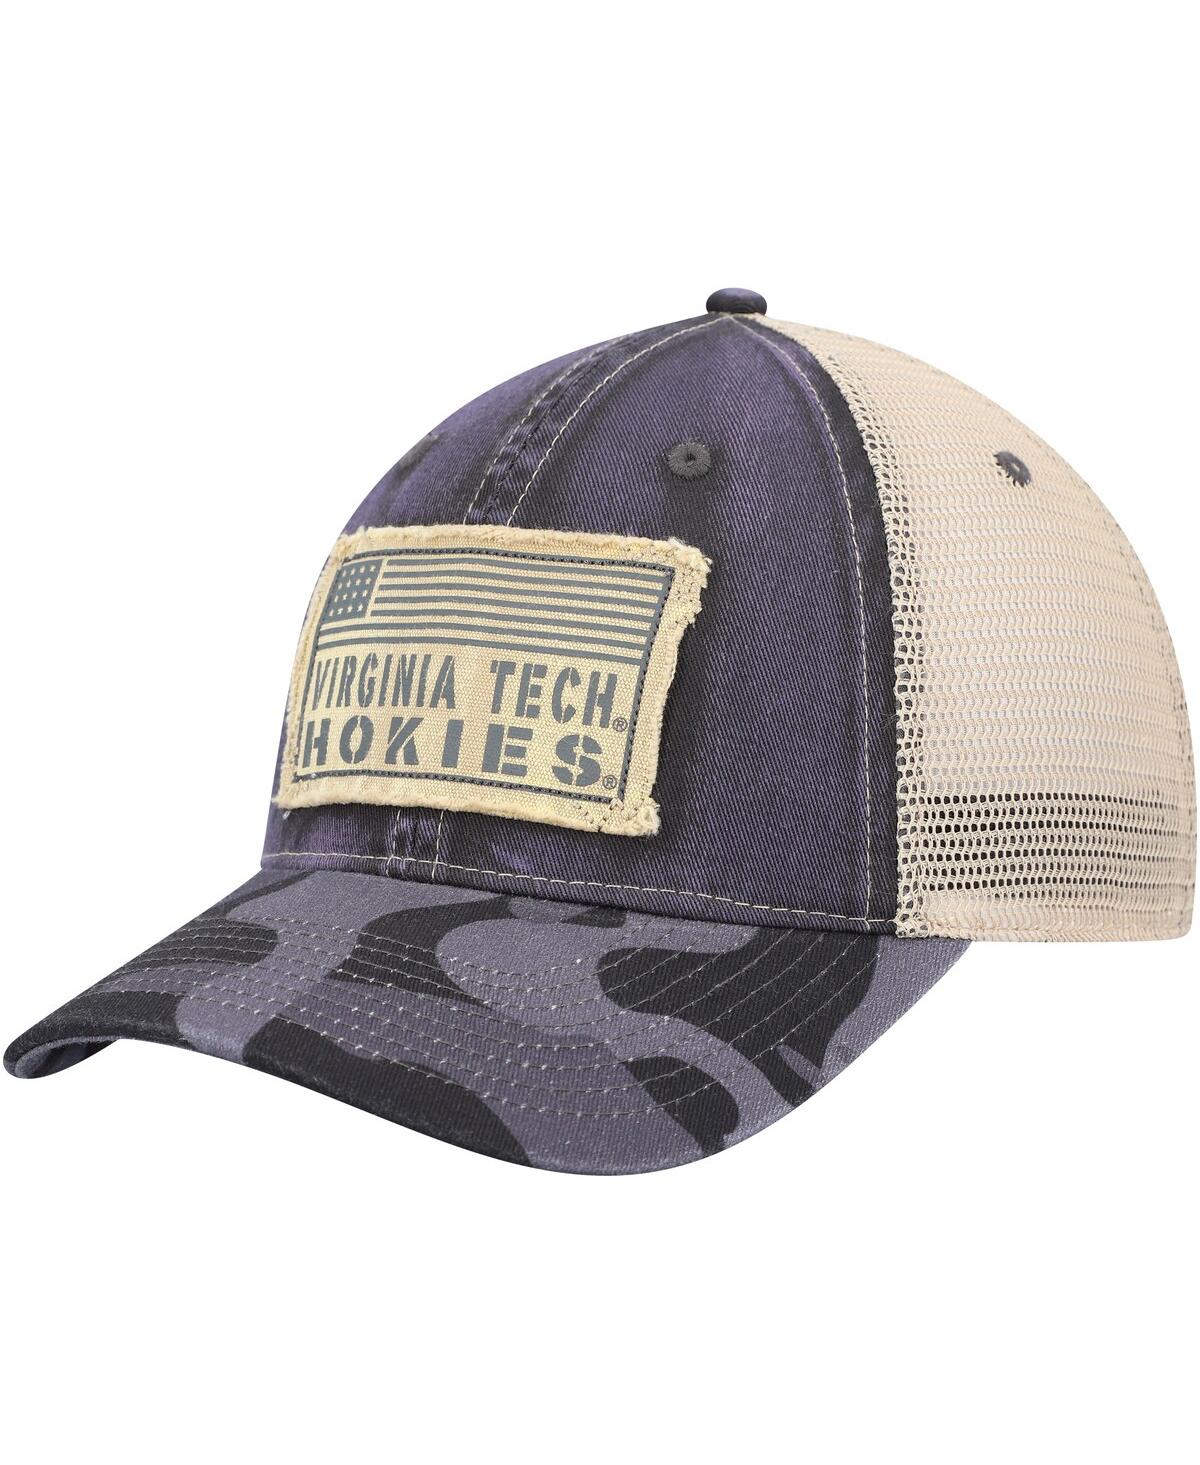 Men's Colosseum Charcoal Virginia Tech Hokies Oht Military-Inspired Appreciation United Trucker Snapback Hat - Charcoal